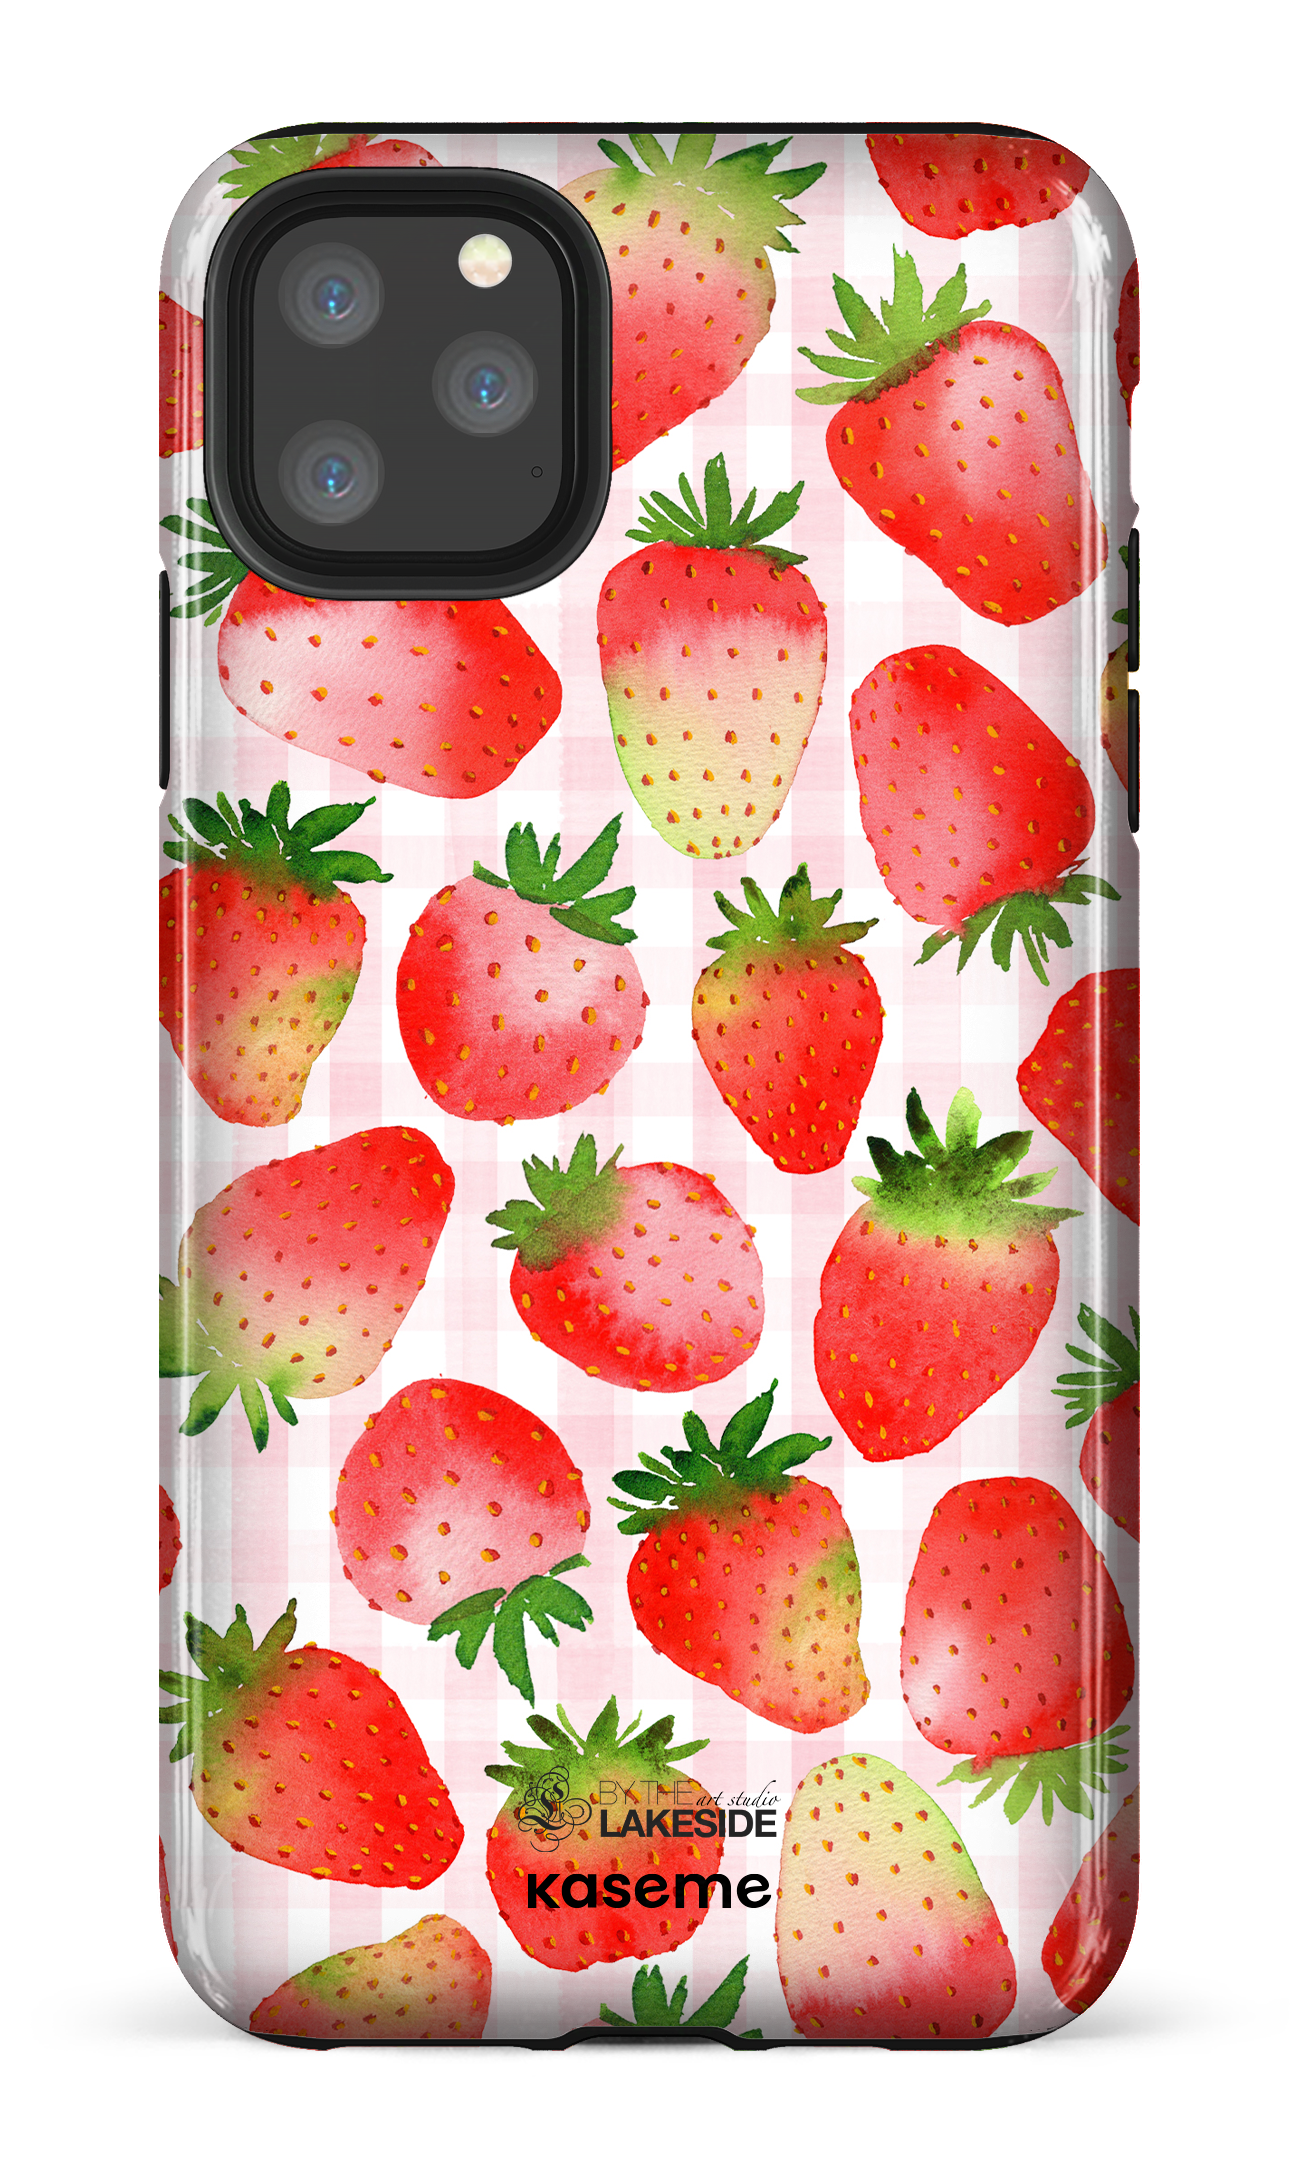 Strawberry Fields by Pooja Umrani - iPhone 11 Pro Max